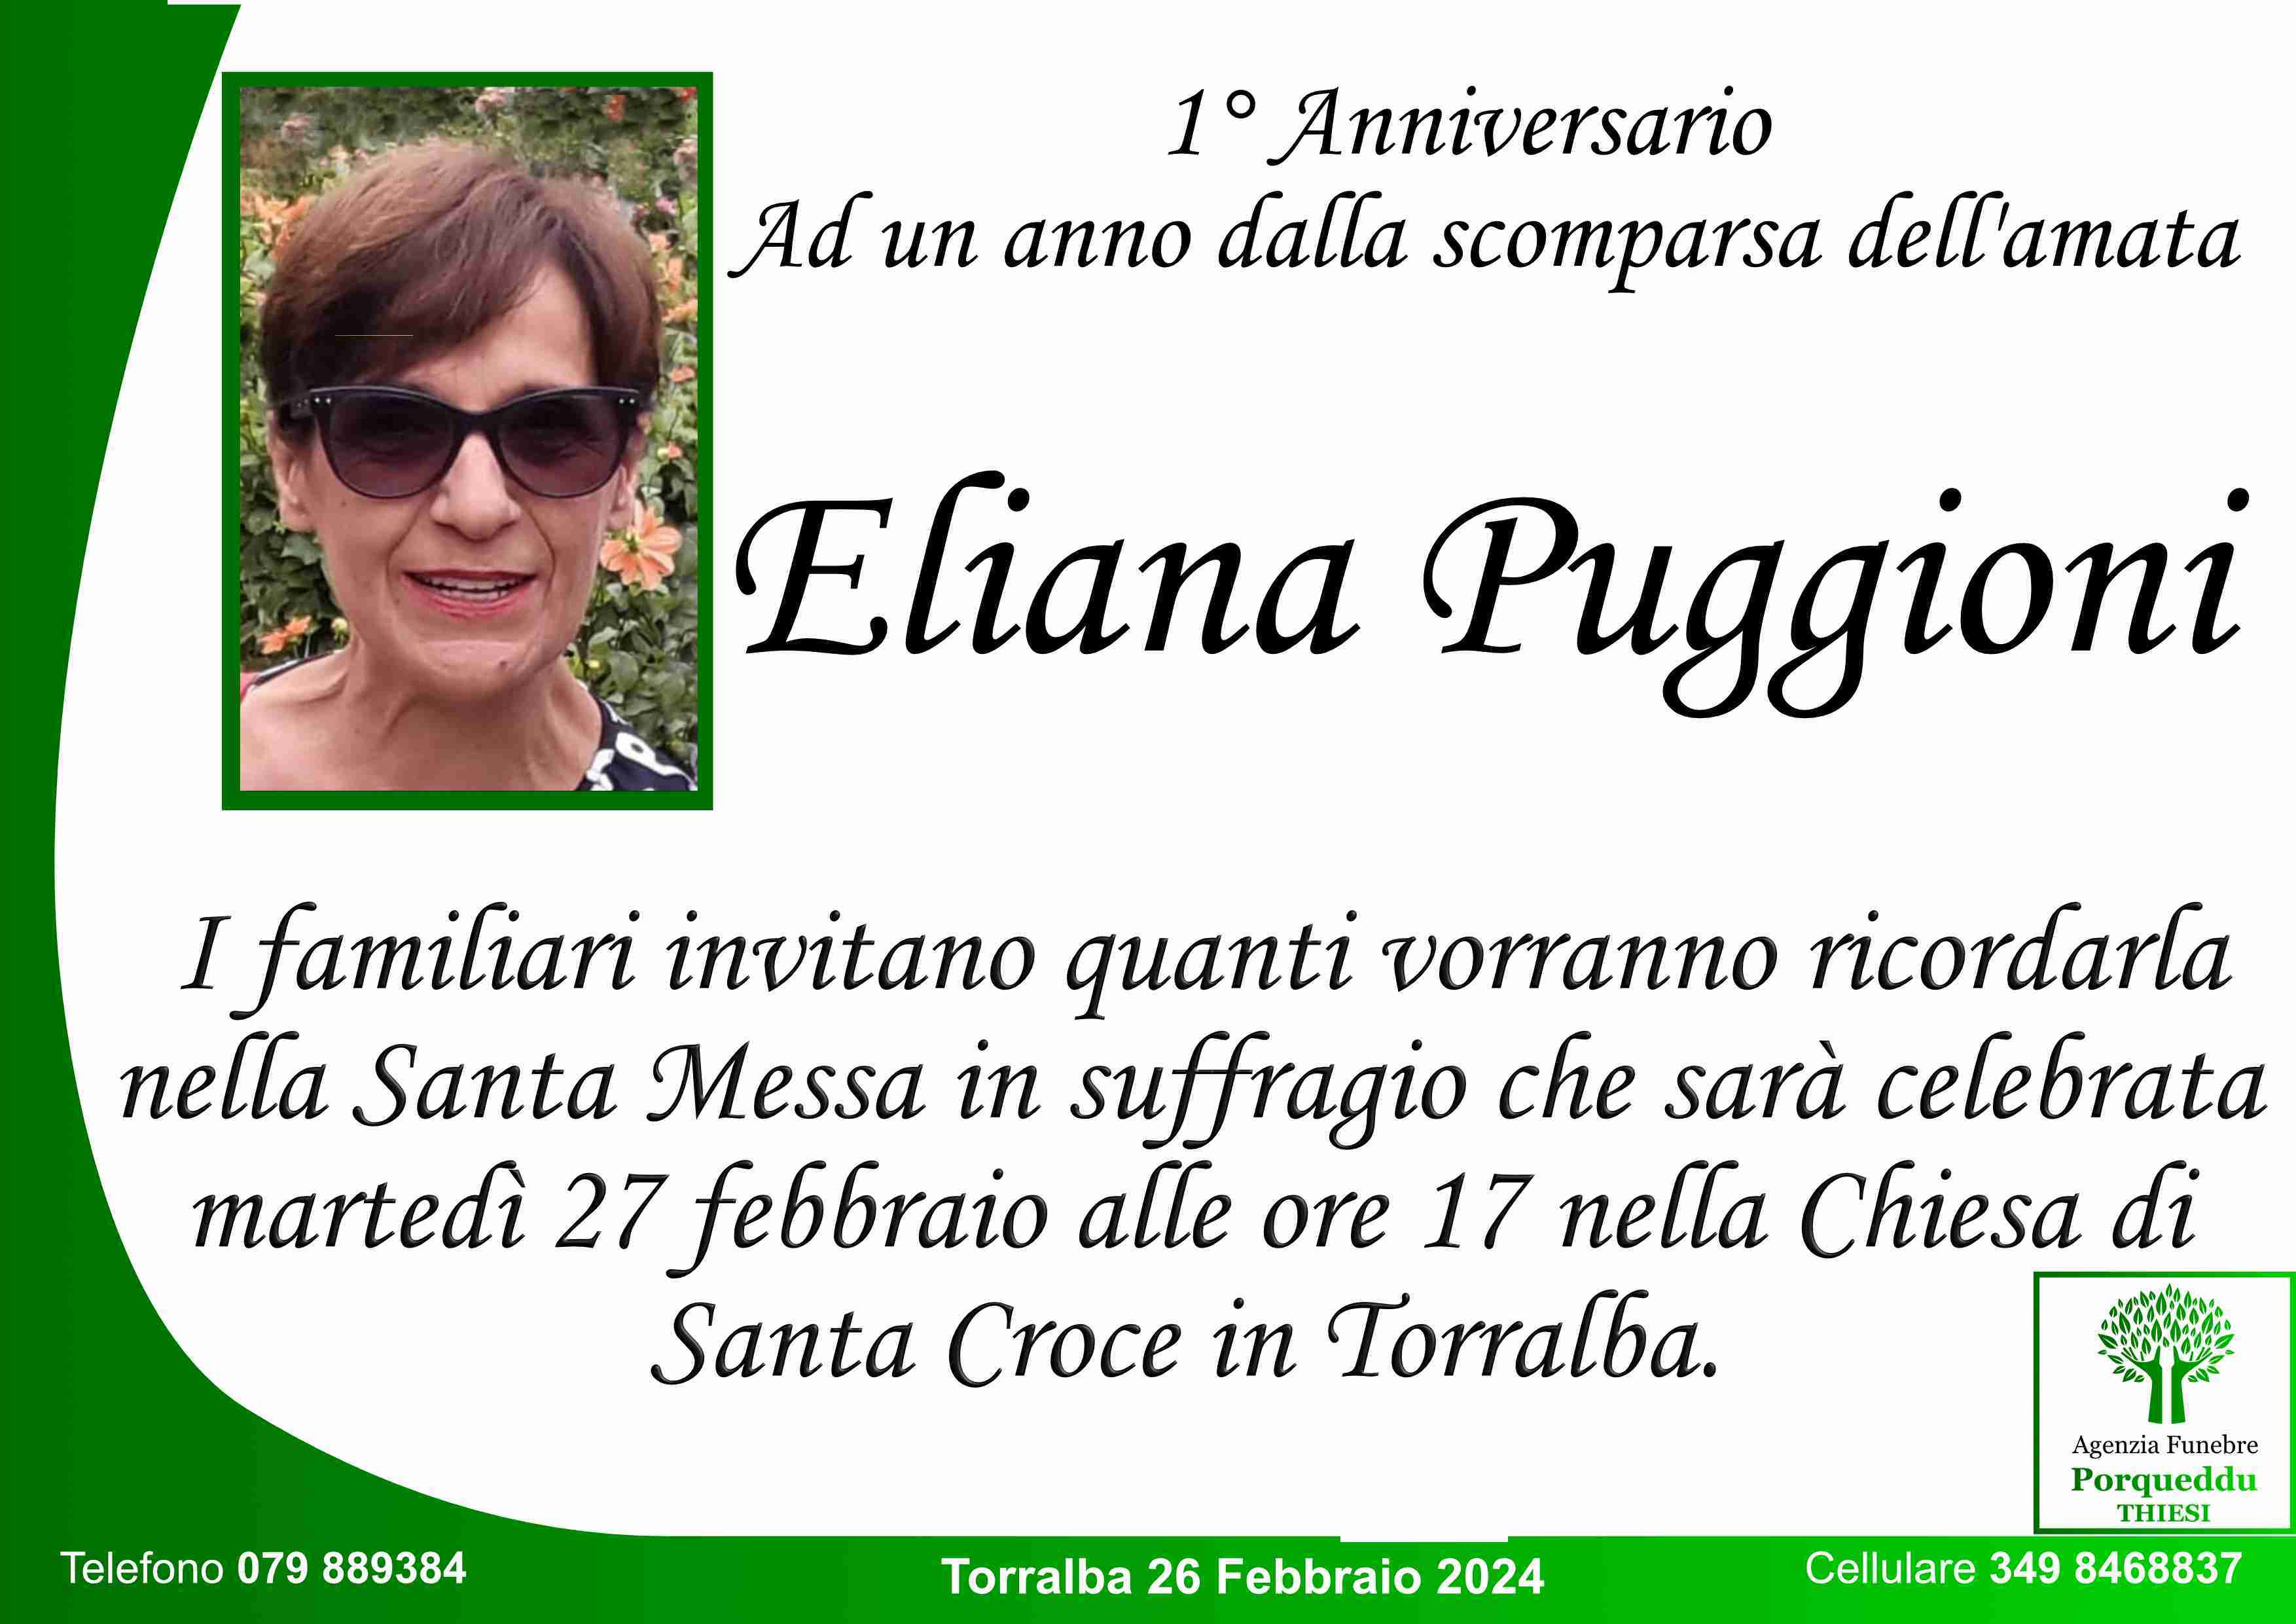 Eliana Puggioni